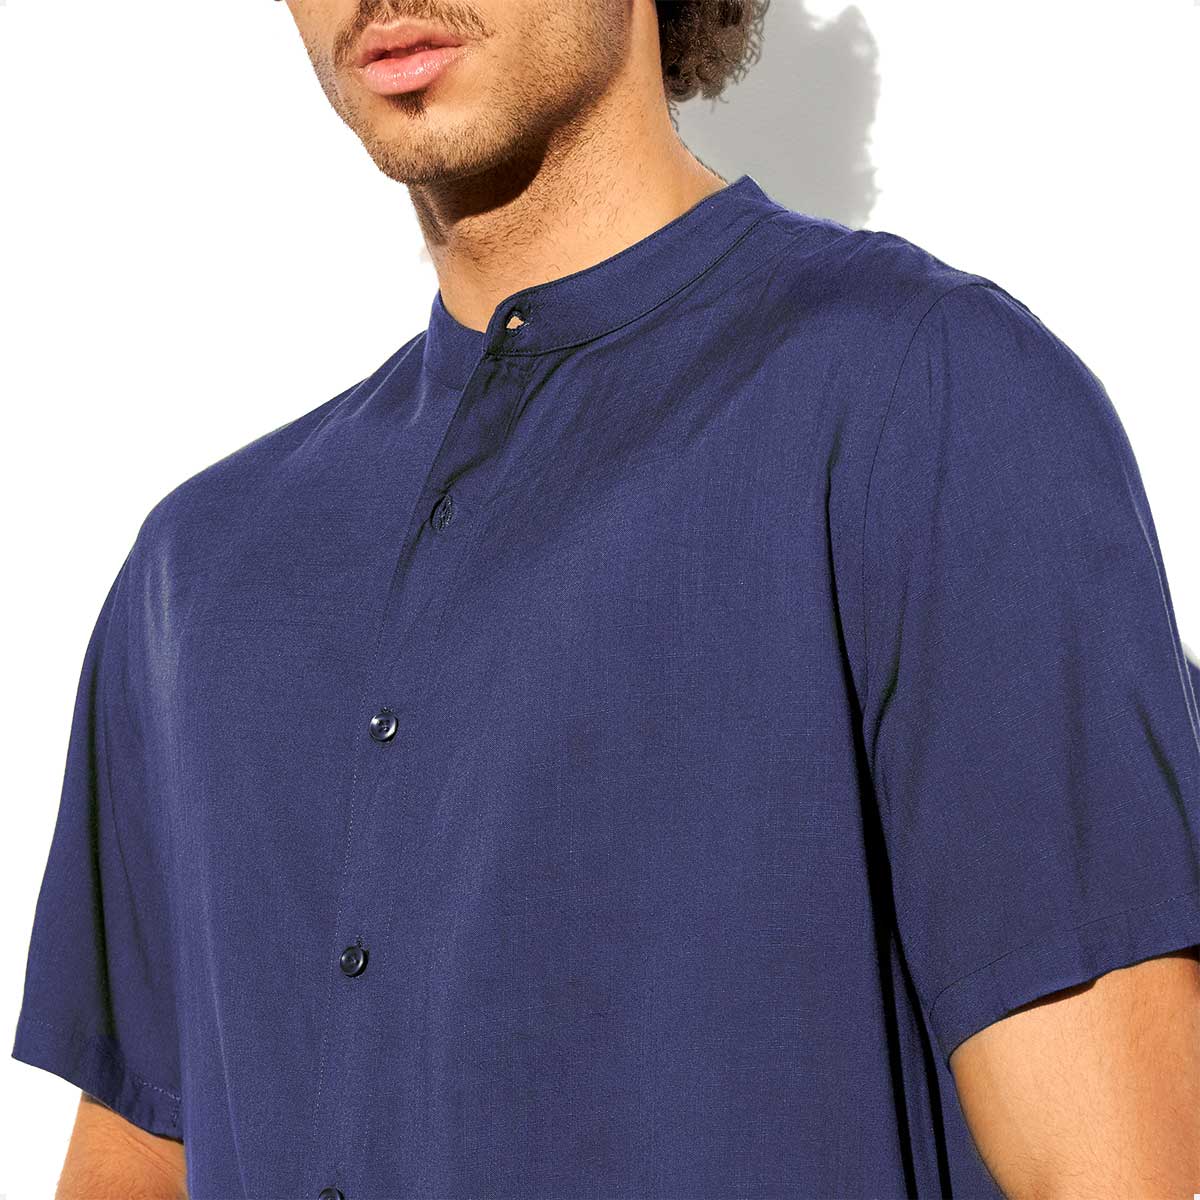 Camisas de Hombre Lino Azul Cuello Mao Manga Corta